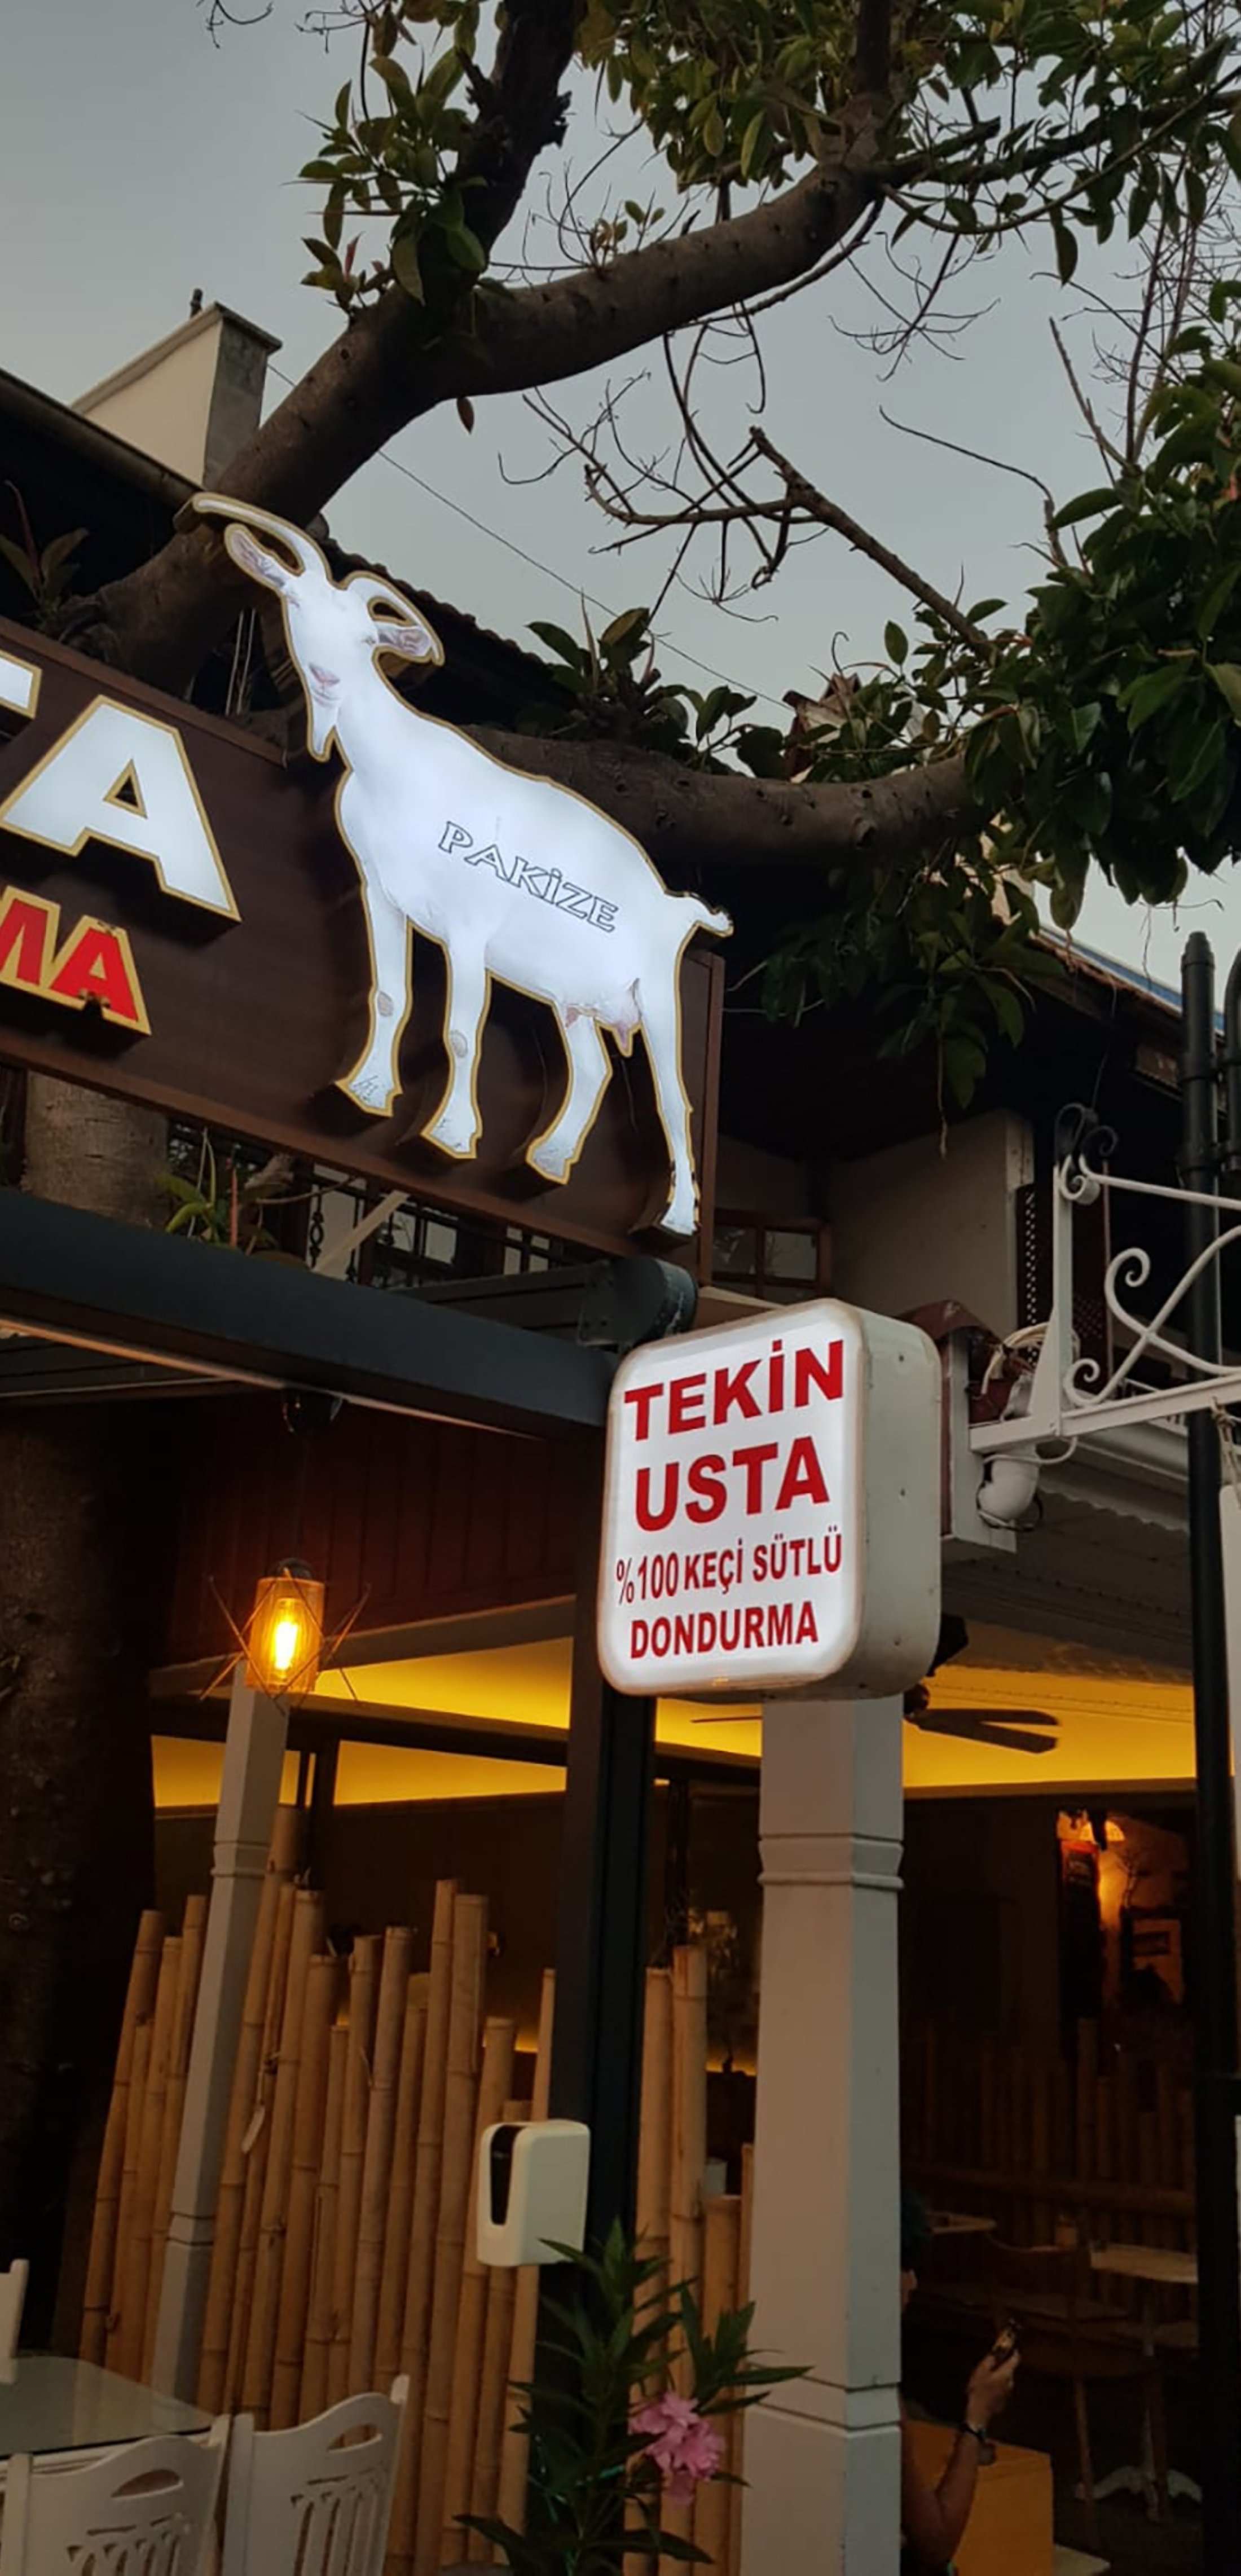 The Tekin Usta Keçi Sütü Ice Cream Shop in Muğla, Turkey. (Photo courtesy of Leyla Yvonne Ergil)